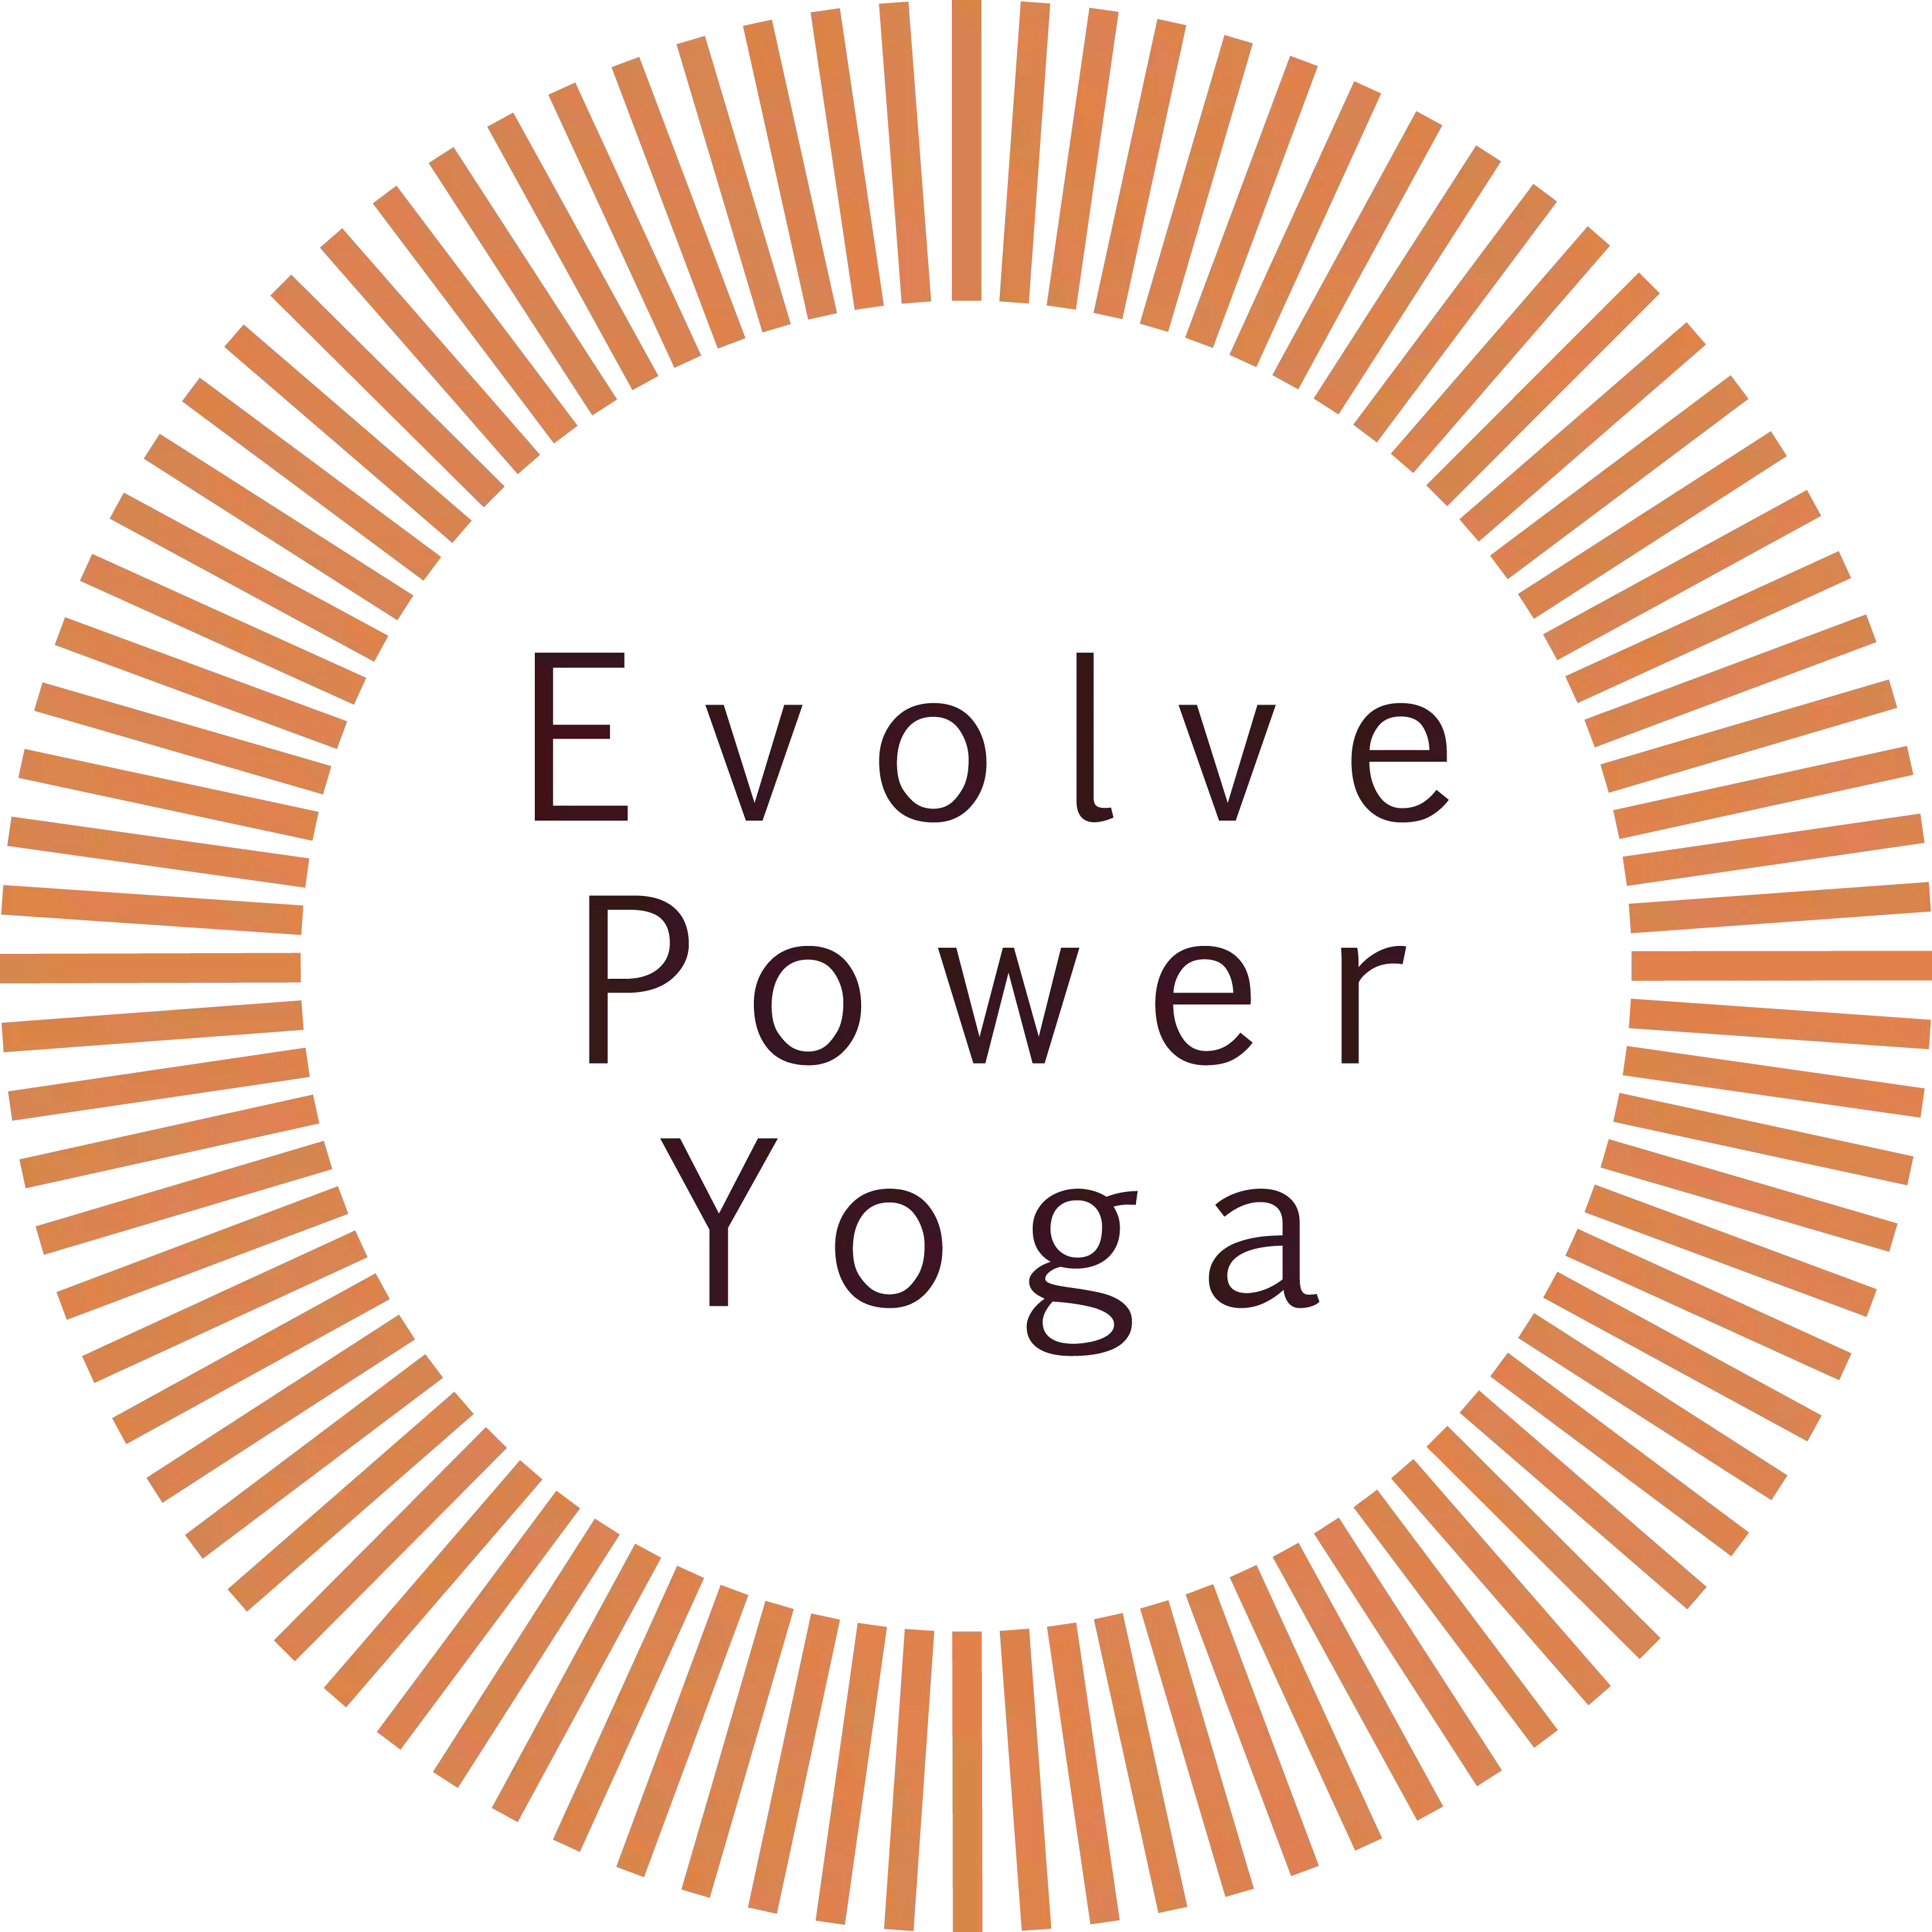 Evolve Power Yoga